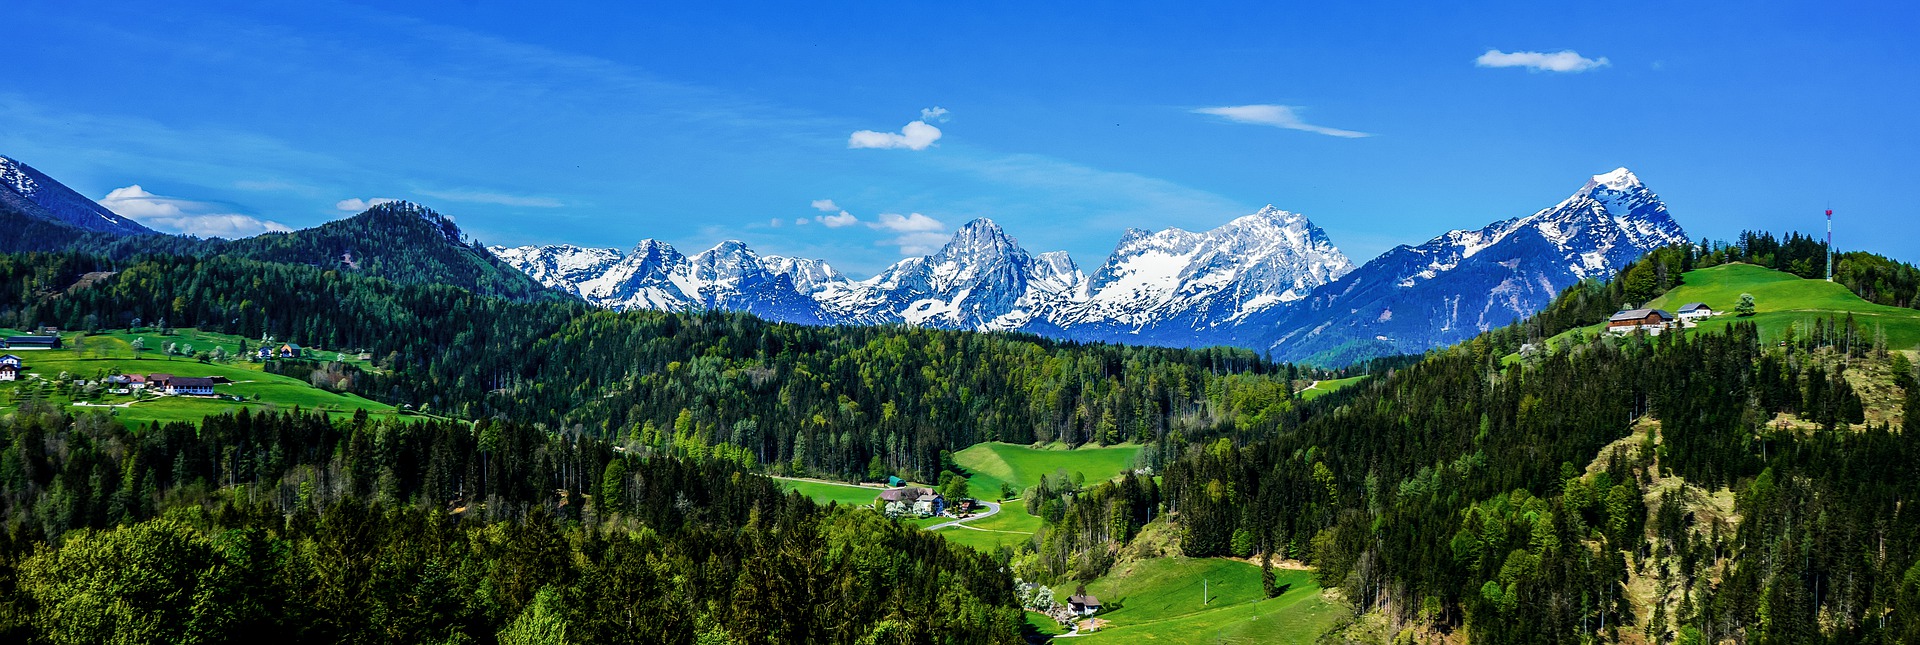 salzburgerland-austria-mountains-g3f7951171_1920.jpg